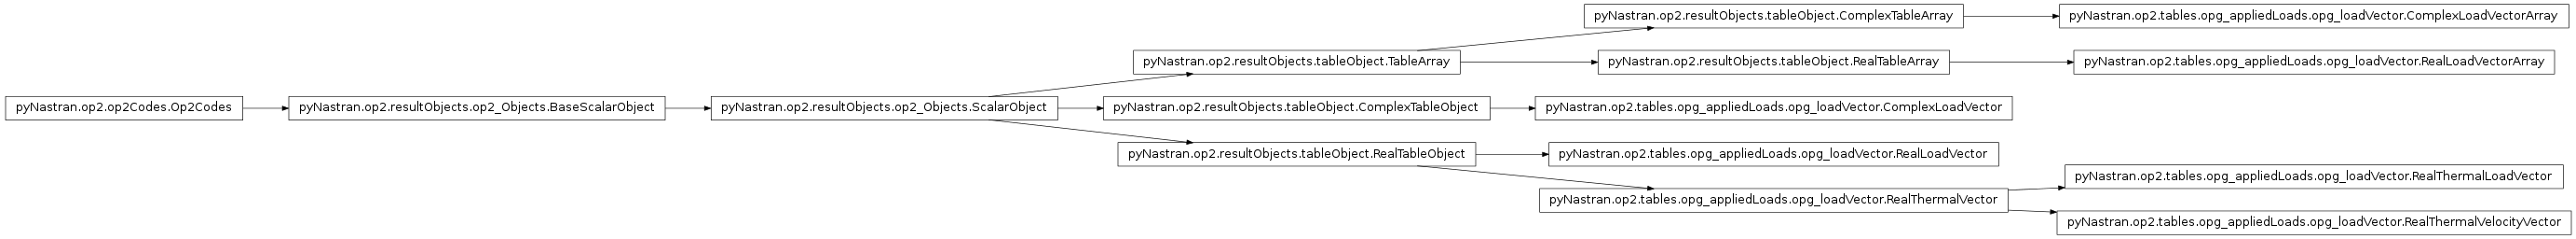 Inheritance diagram of pyNastran.op2.tables.opg_appliedLoads.opg_loadVector